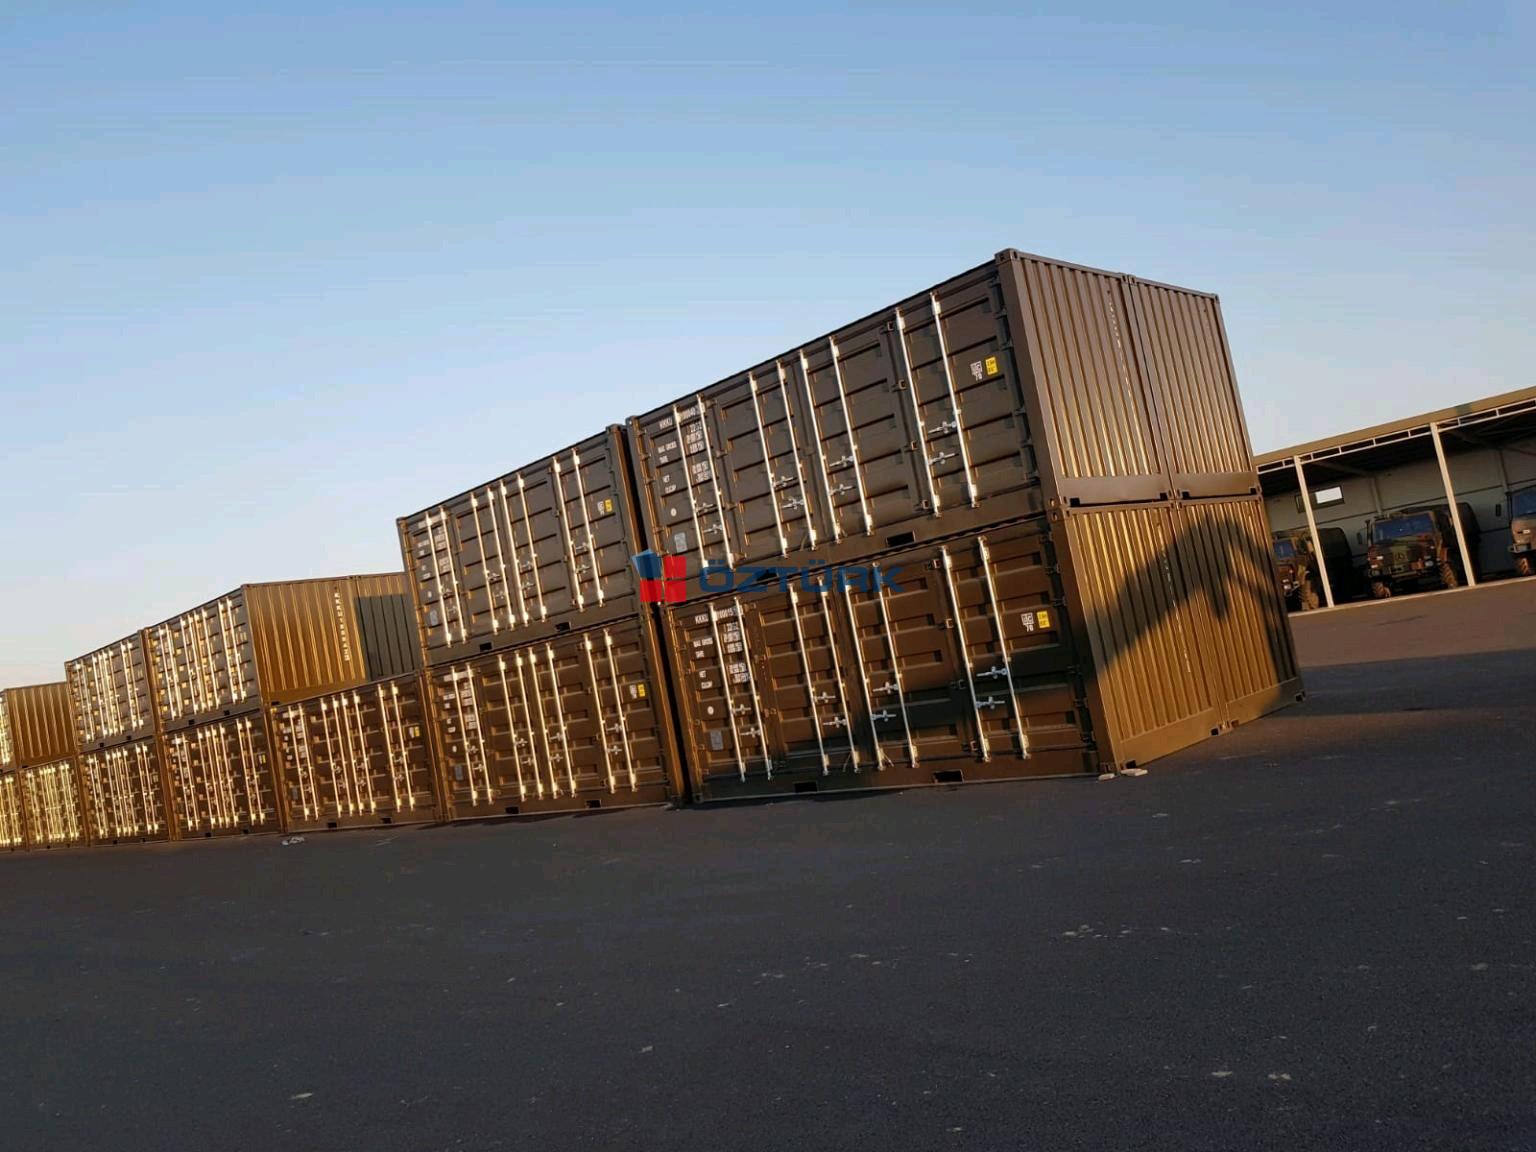 Askeri container, Army container, Askeri konteynerleri